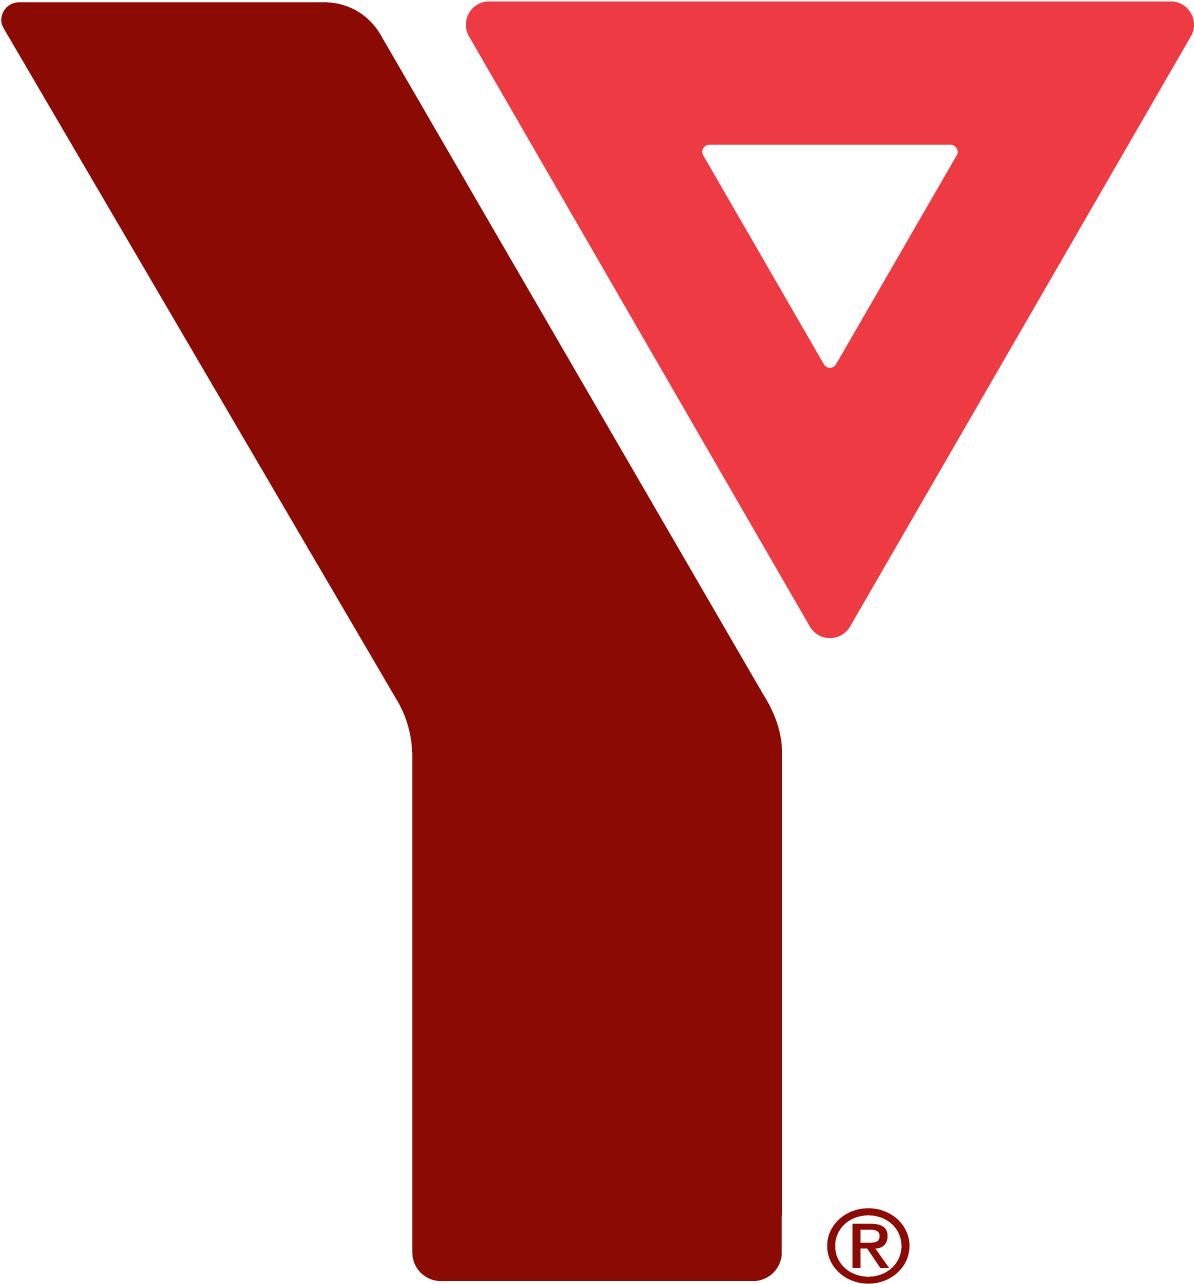 February 8, February 13, February 15, February - Ymca Of Greater Toronto Logo (1200x1292)